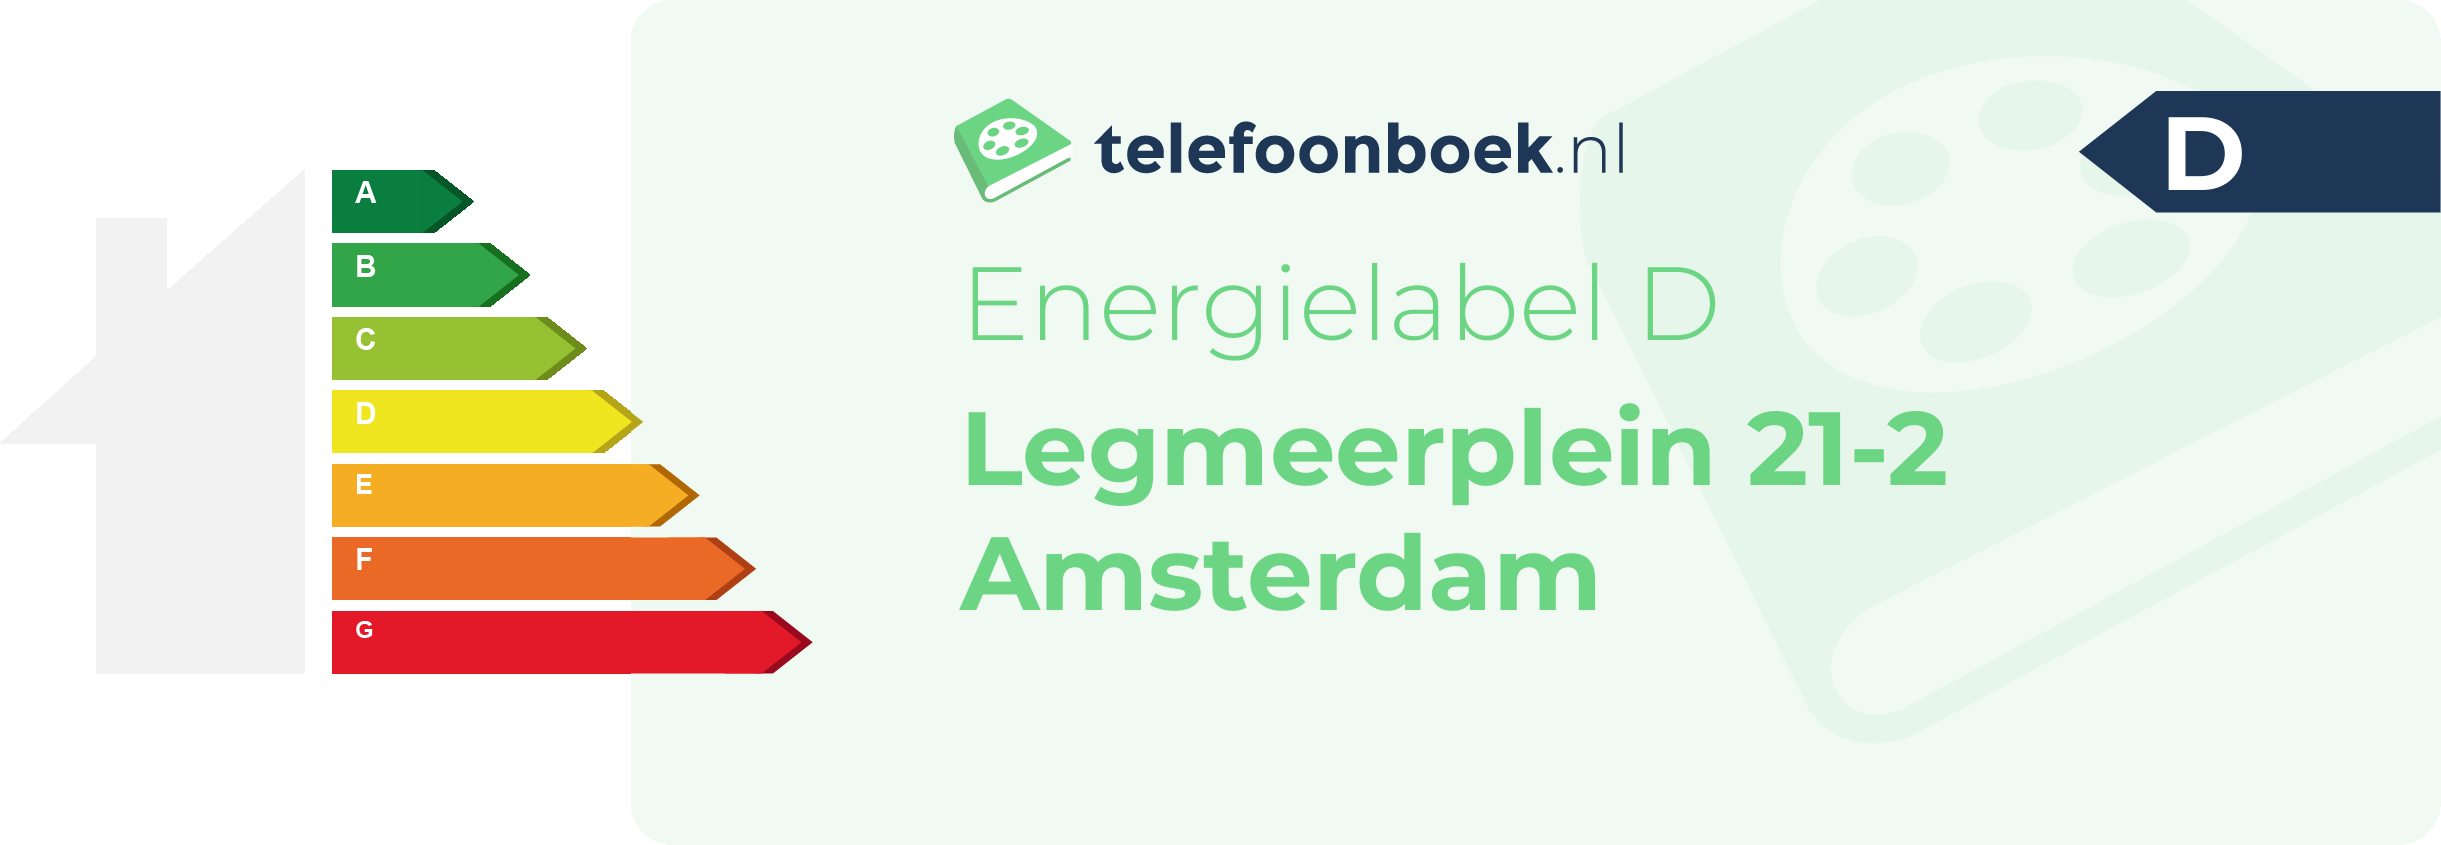 Energielabel Legmeerplein 21-2 Amsterdam